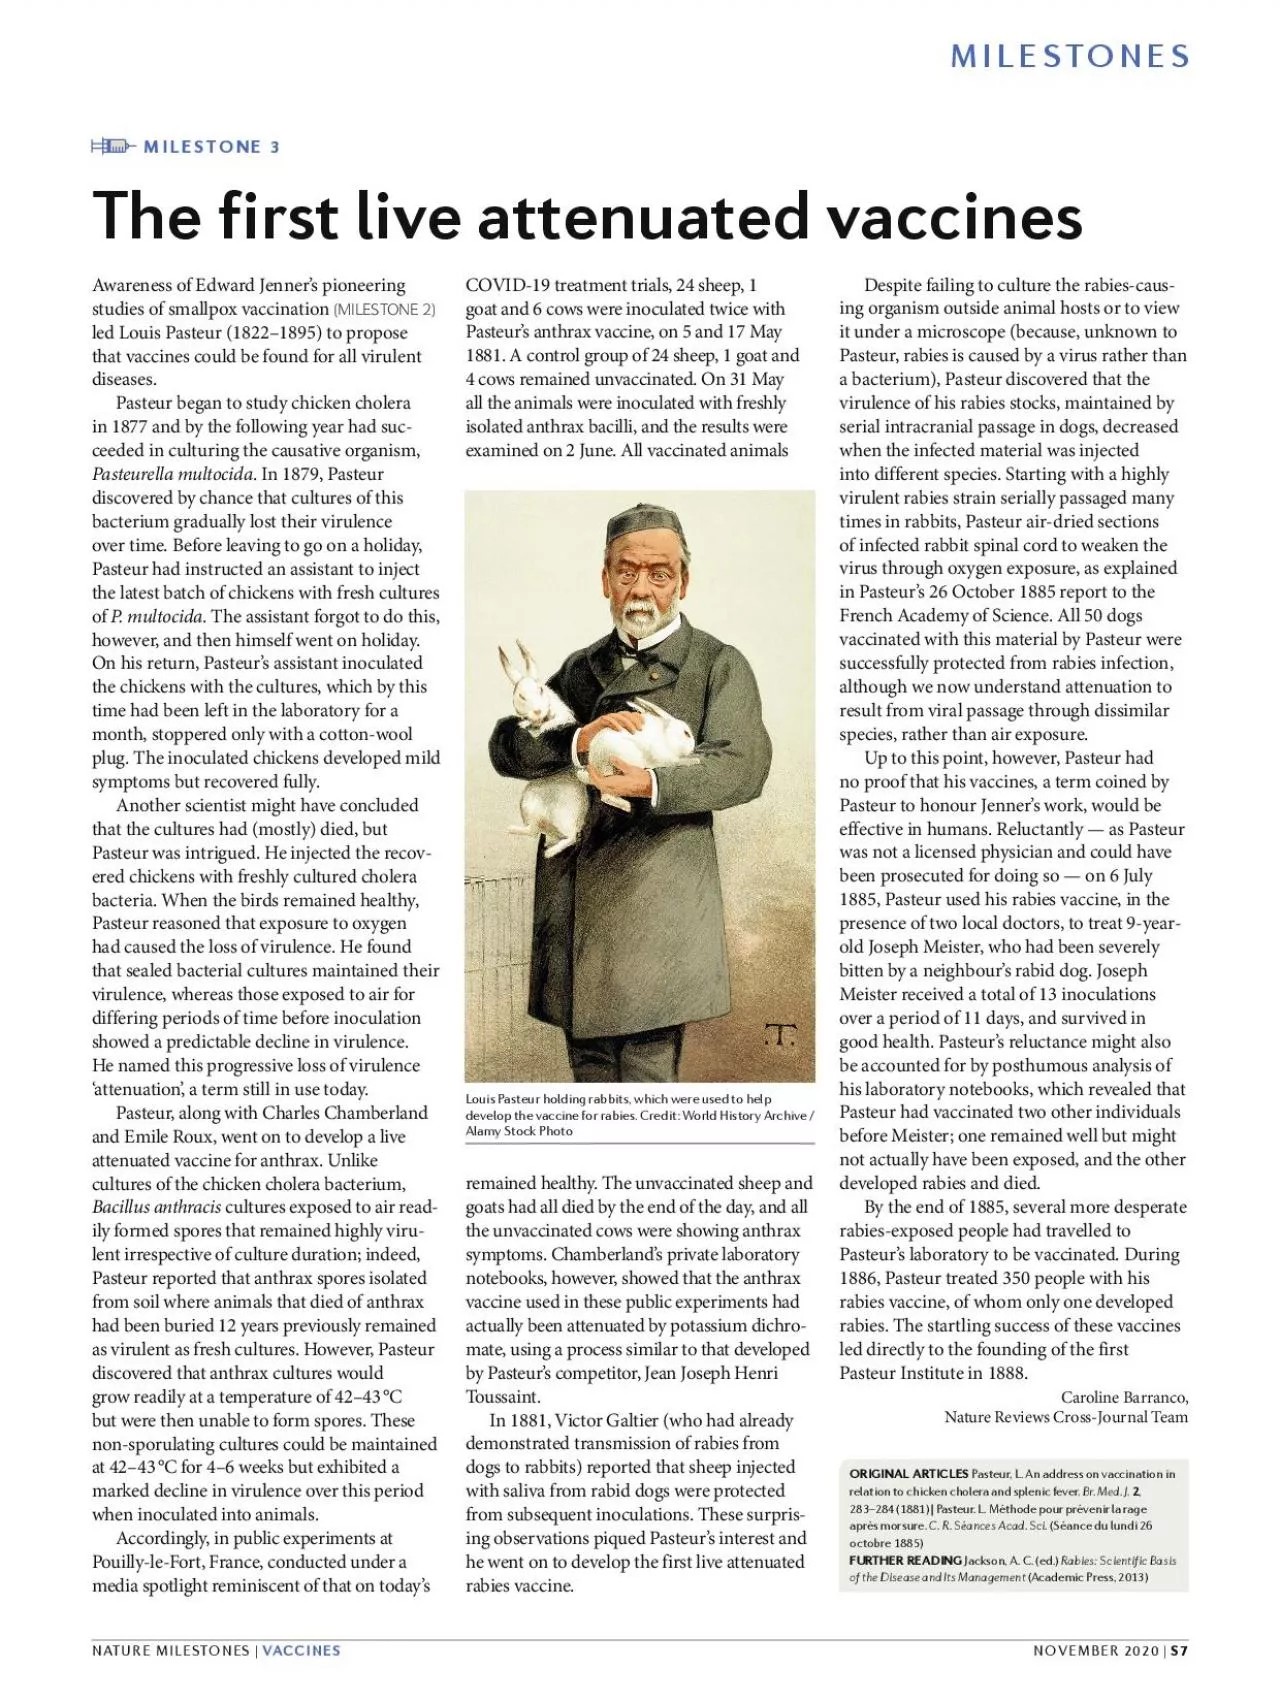 Awareness of Edward Jenner146s pioneering studies of smallpox vacci